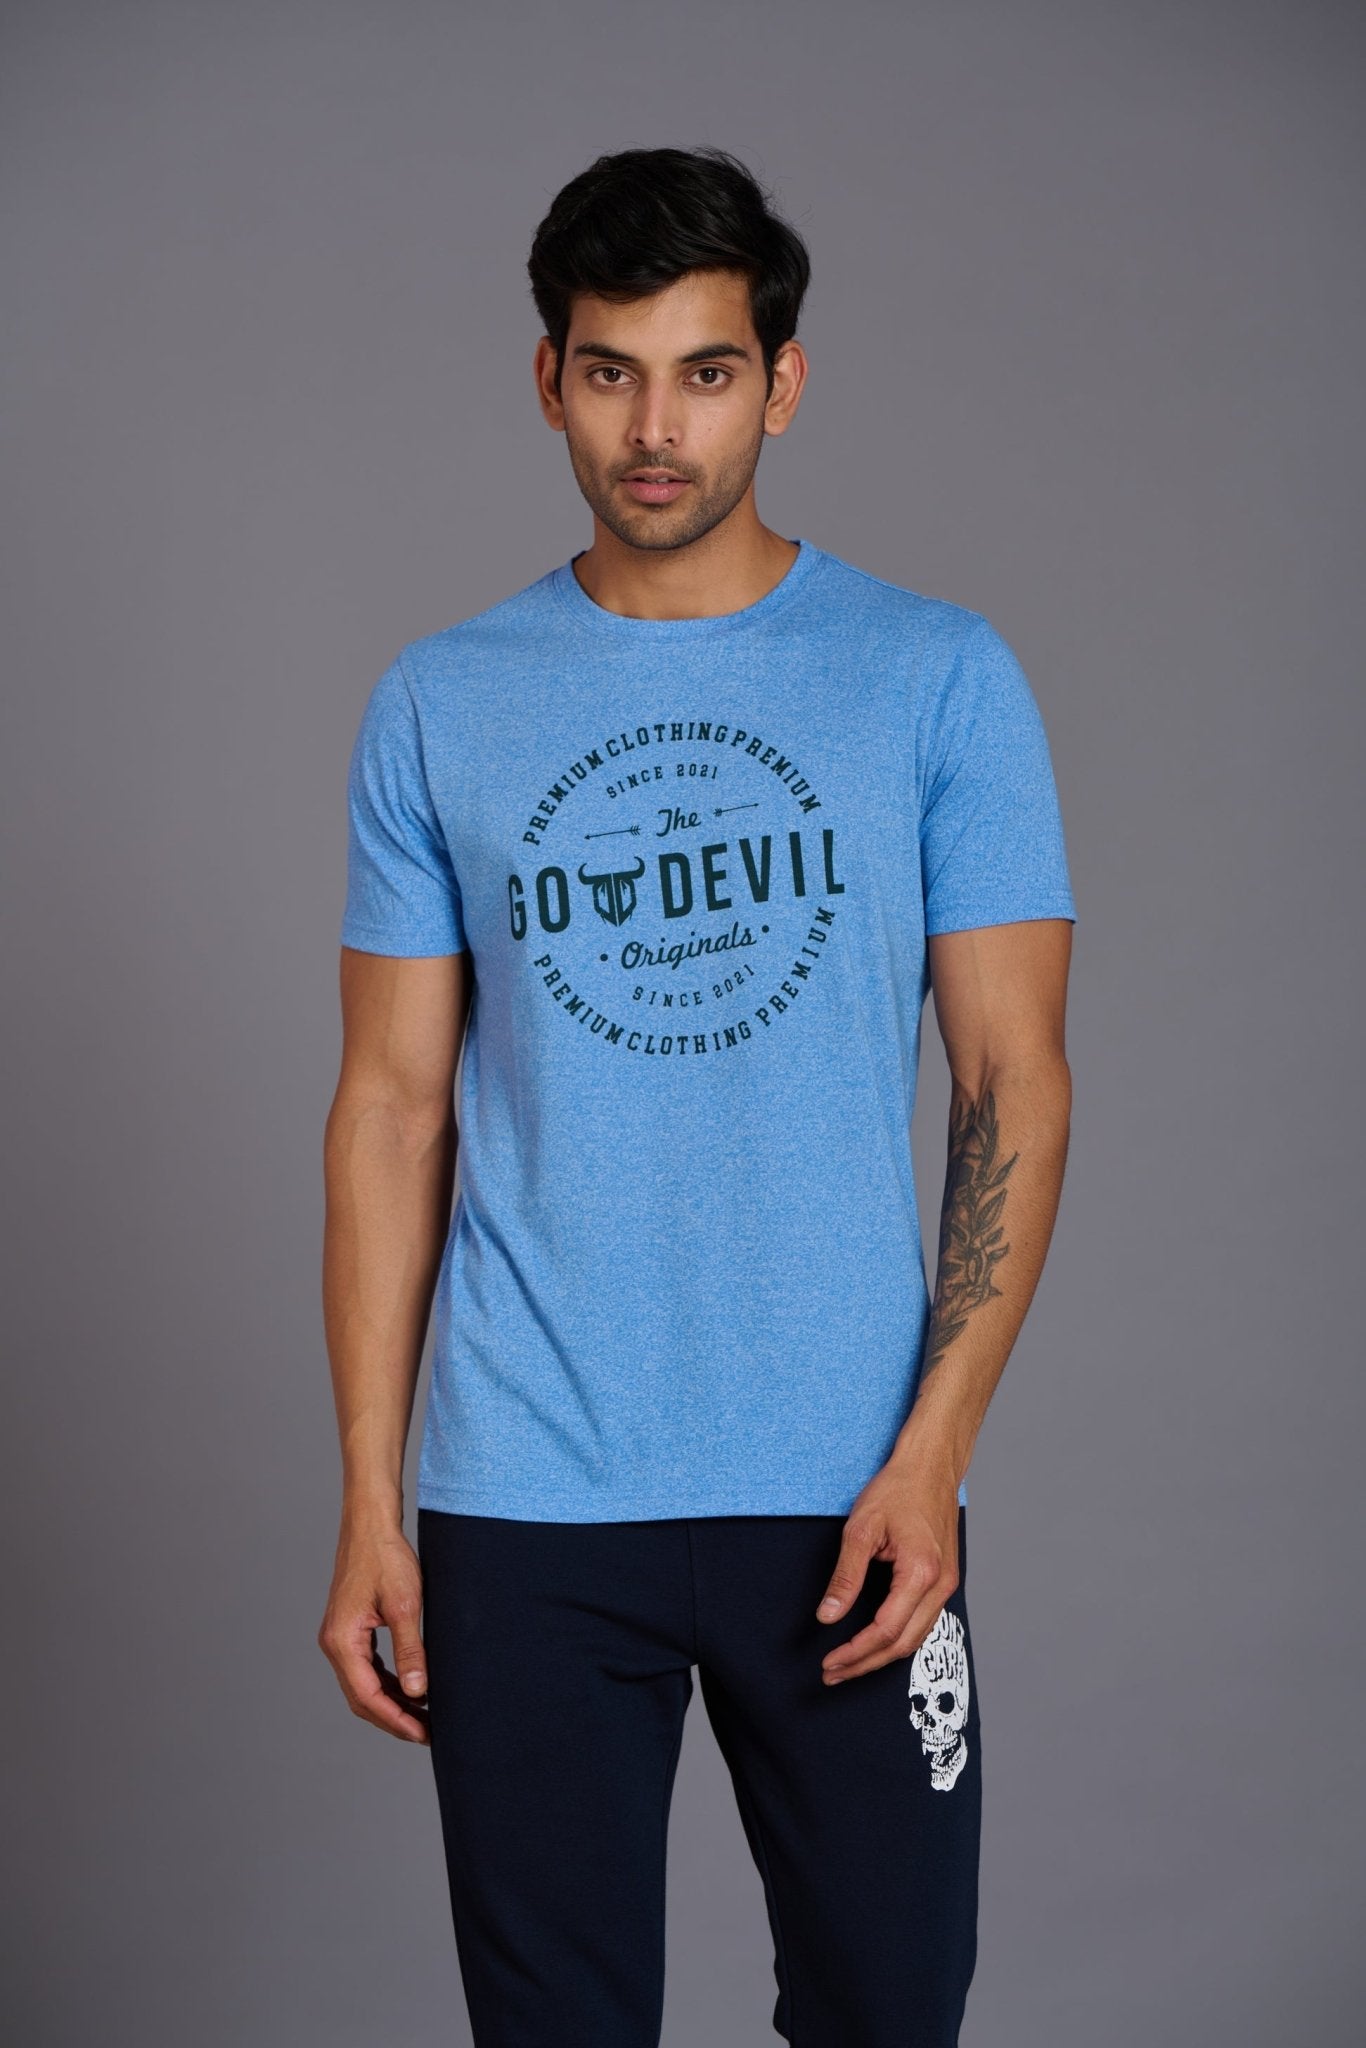 Go Devils Originals Sky Blue T-Shirt for Men - Go Devil